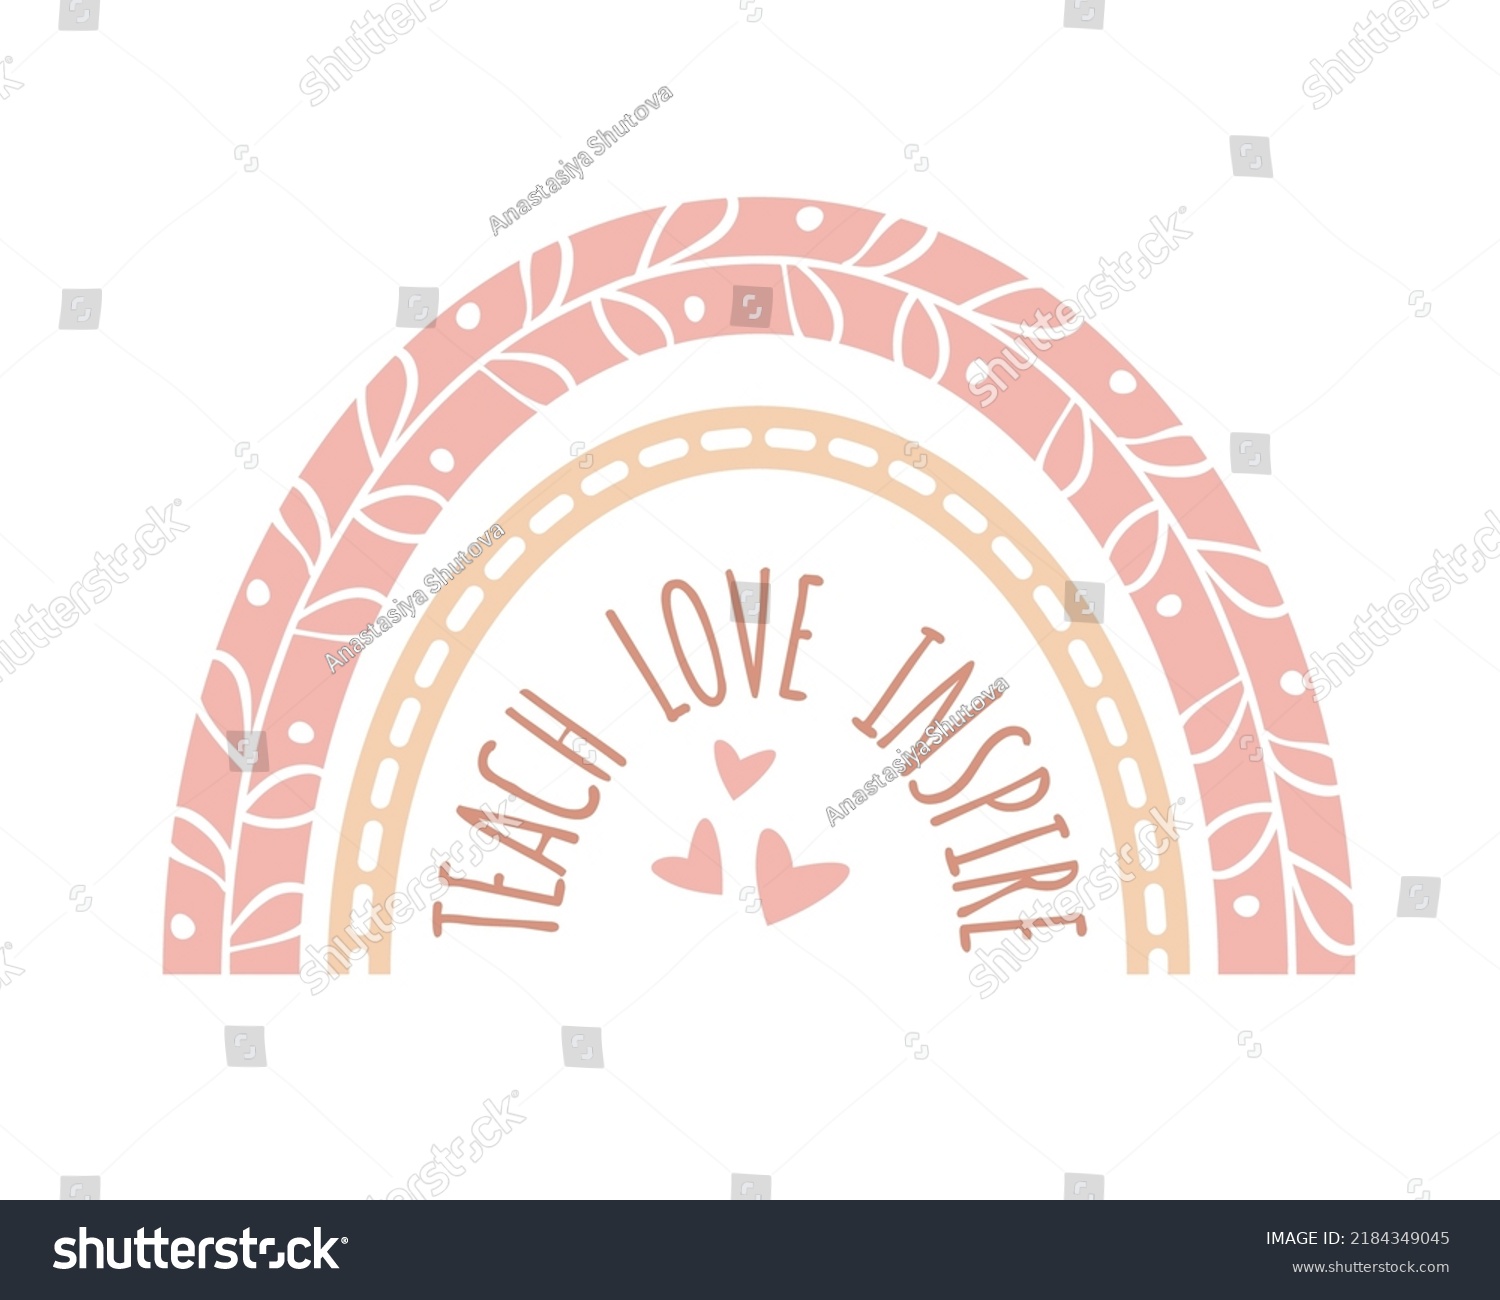 SVG of Teach love inspire Svg cut file. Teacher rainbow vector illustration isolated on white background. Teacher's day shirt or card design svg